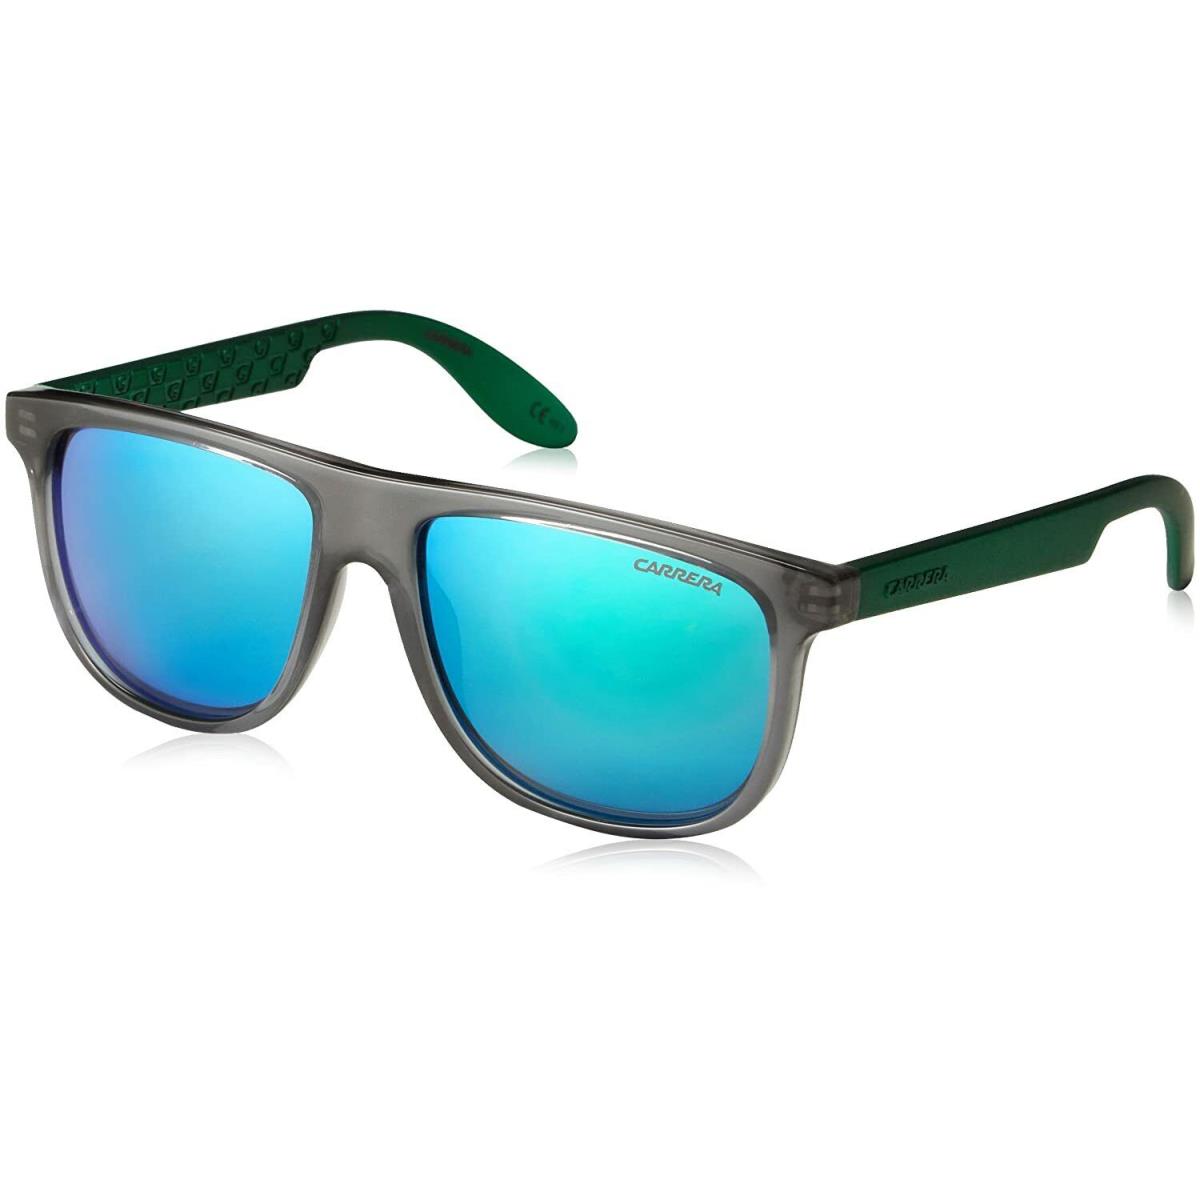 Carrera Carrerino 13 Mat Z9 Trans Grey Green Mirror 50mm Children Sunglasses - Grey Frame, Gray with Green Mirror Effect Lens